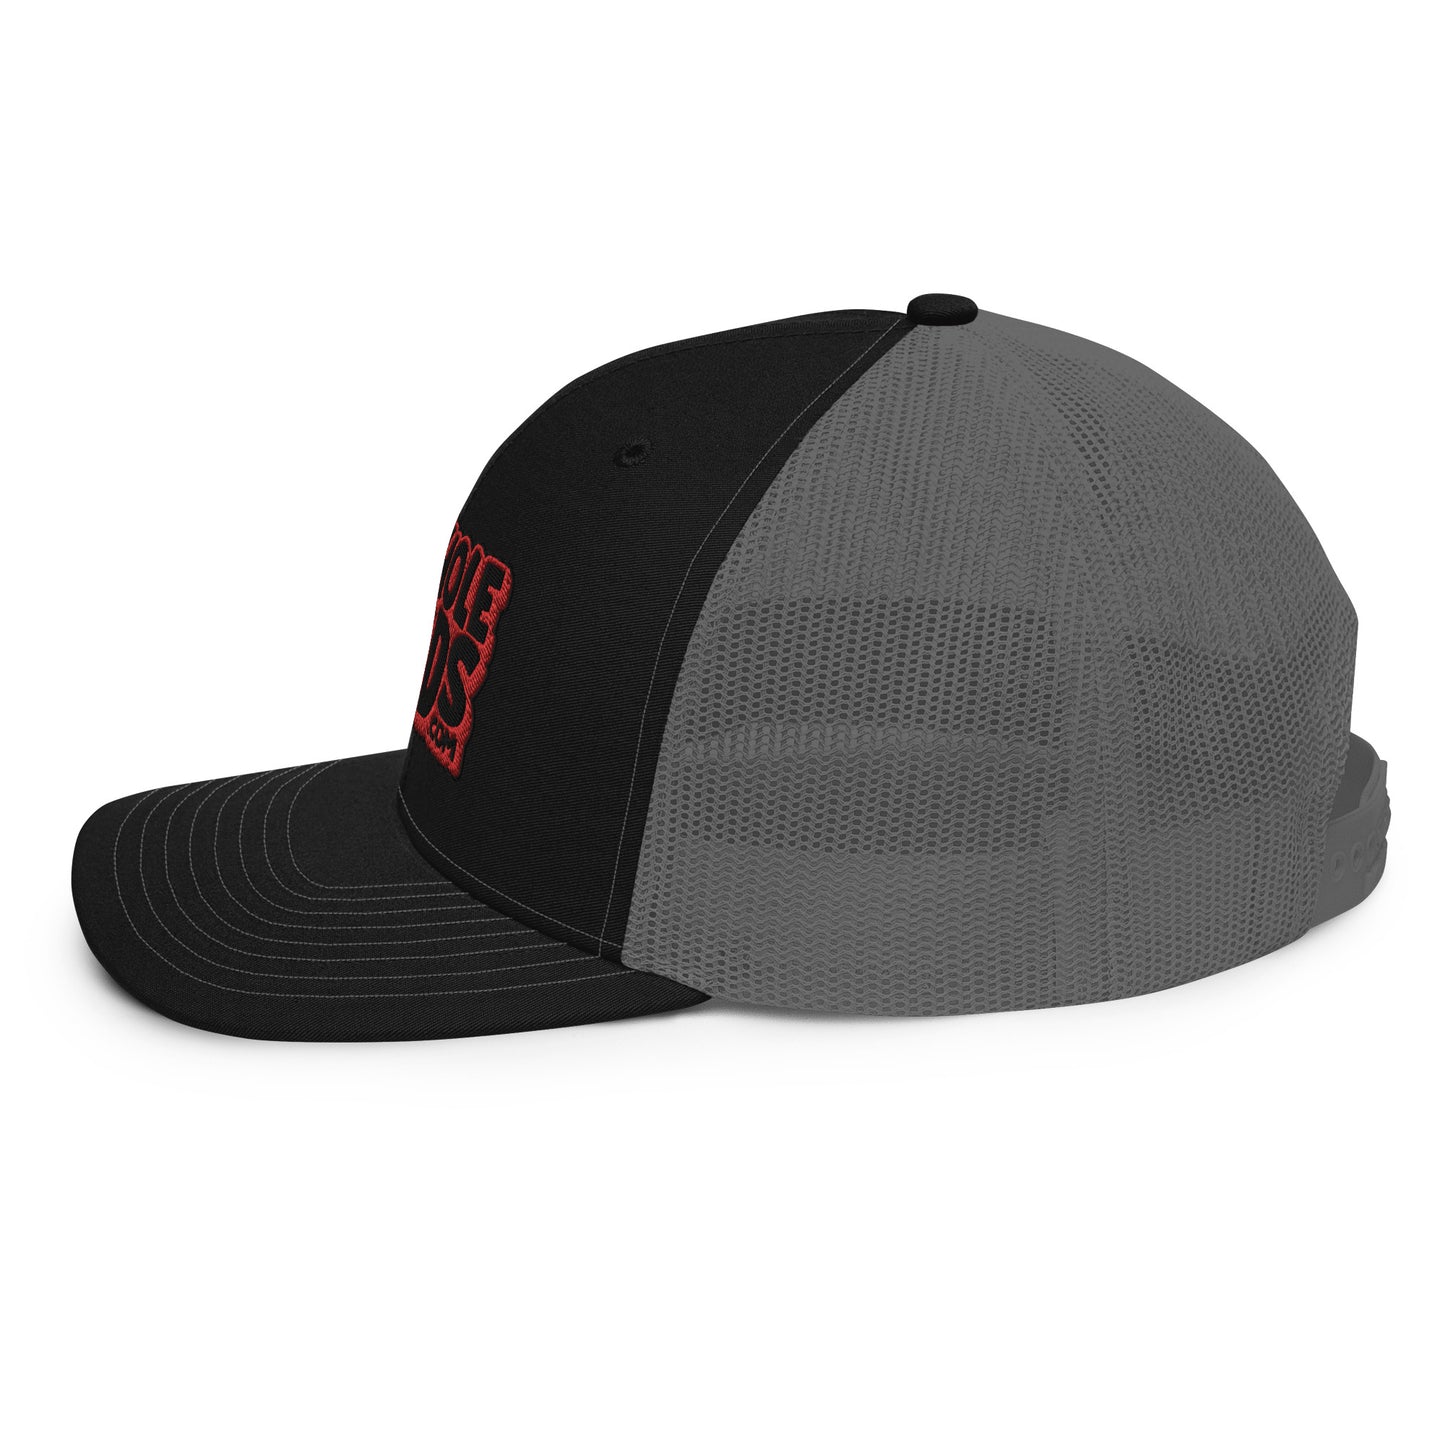 black/red nerds logo Richardson 112 snapback Trucker hat